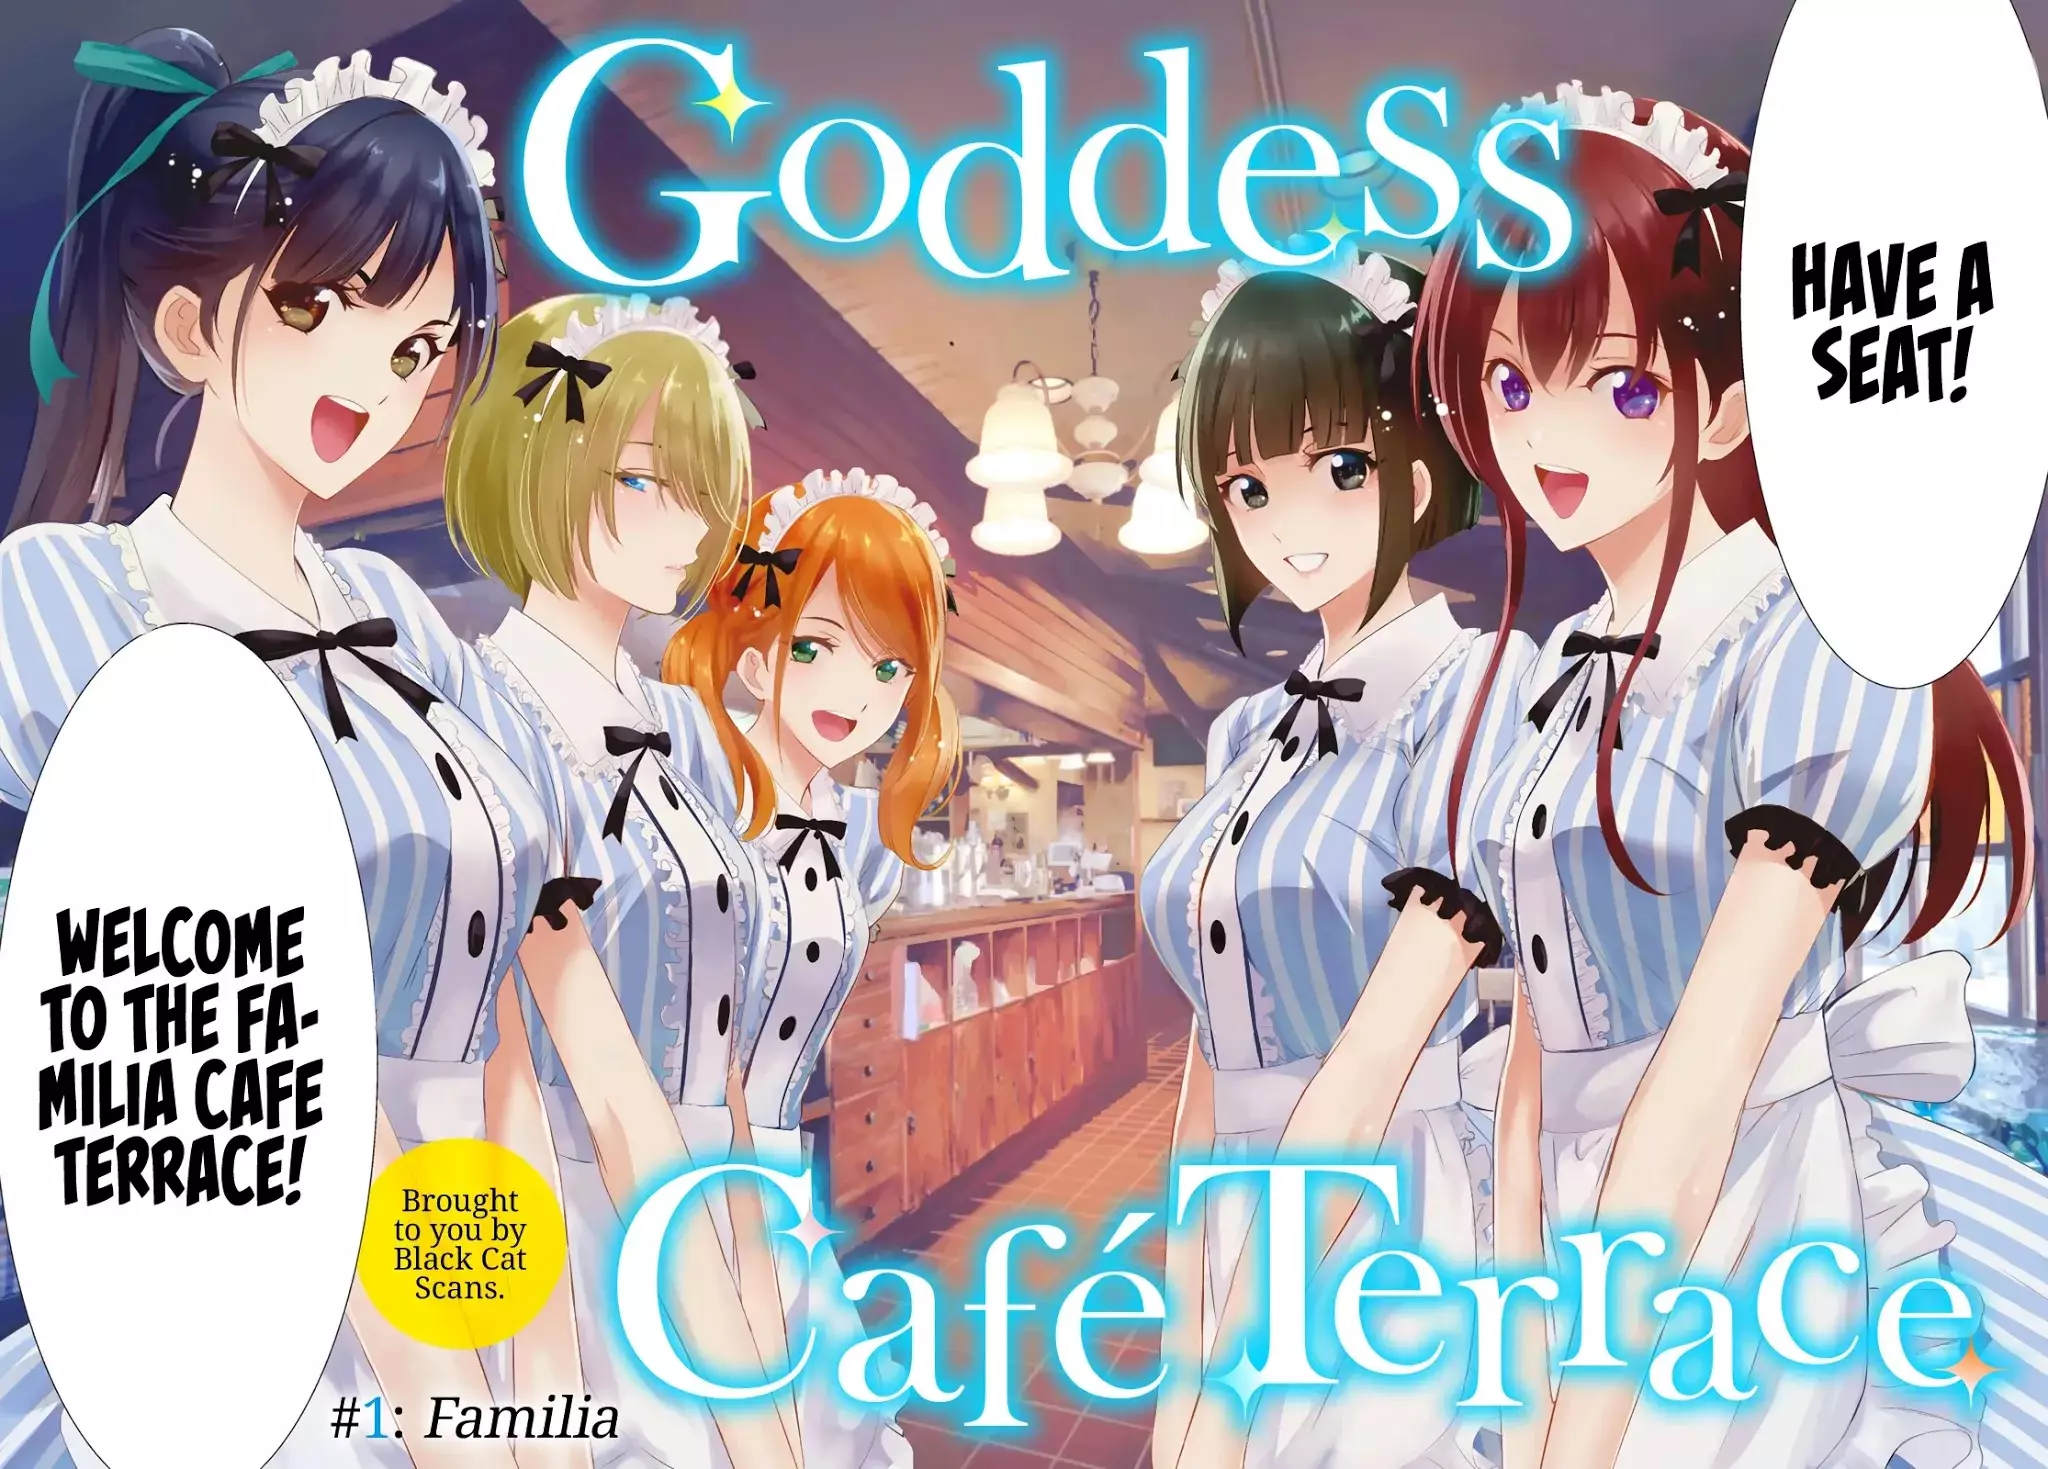 Трасса кафе богинь. Манга Goddess Cafe Terrace. Goddess Café Terrace.